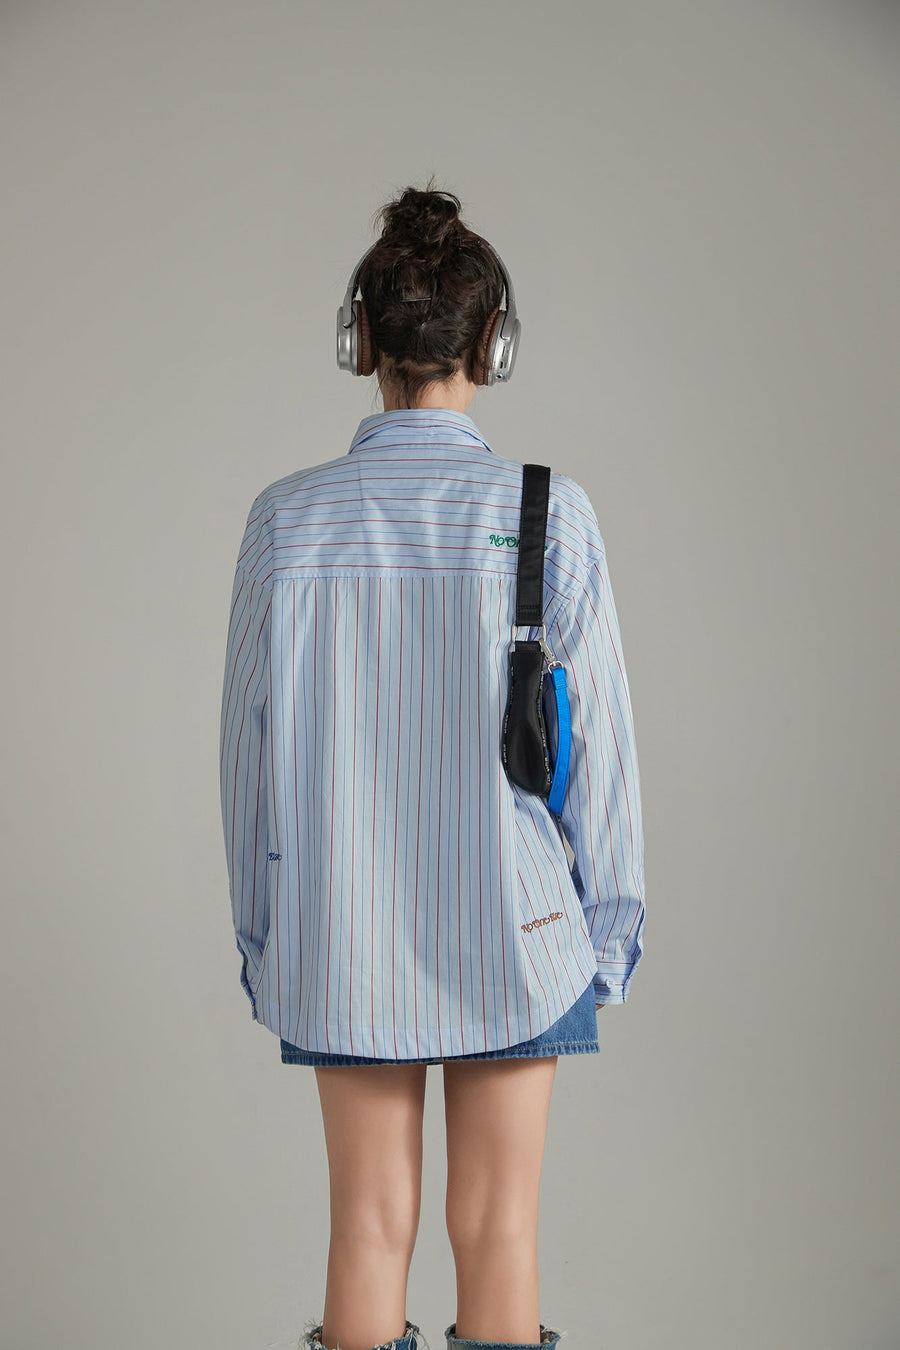 CHUU Embroidered Striped Basic Shirt